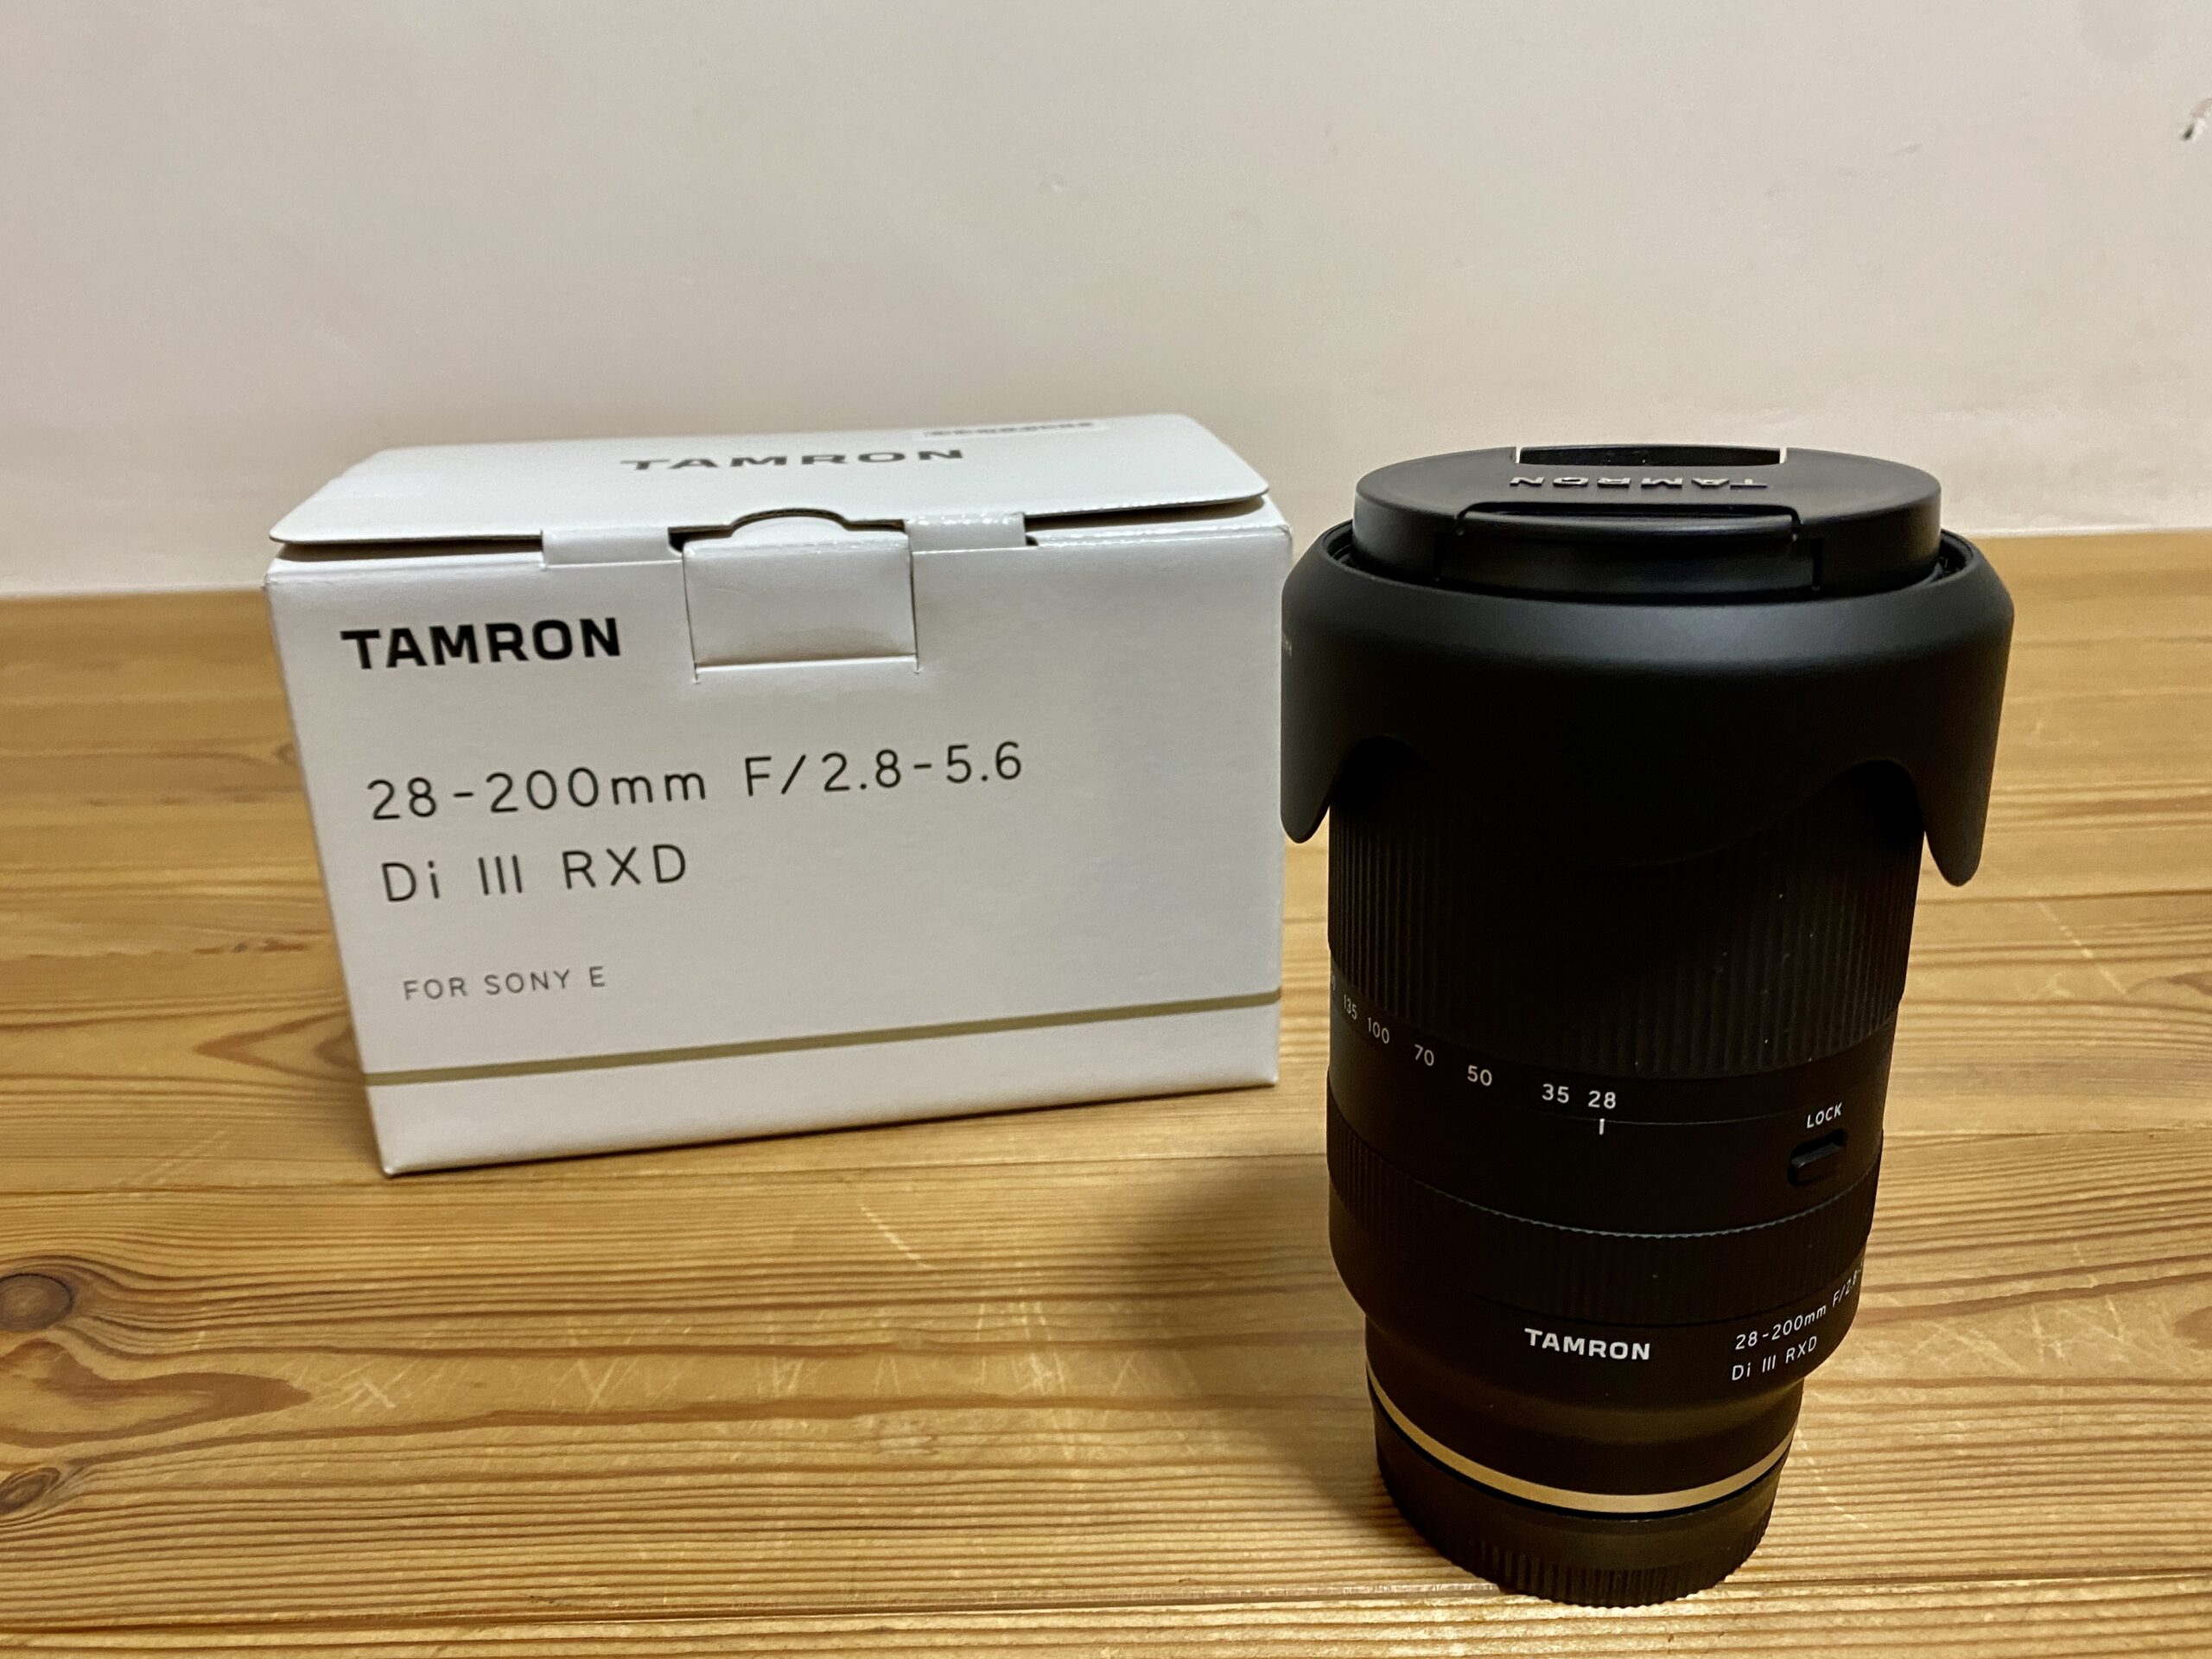 TAMRON】タムロン28-200mm F/2.8-5.6 Di III RXD (Model A071)を購入 